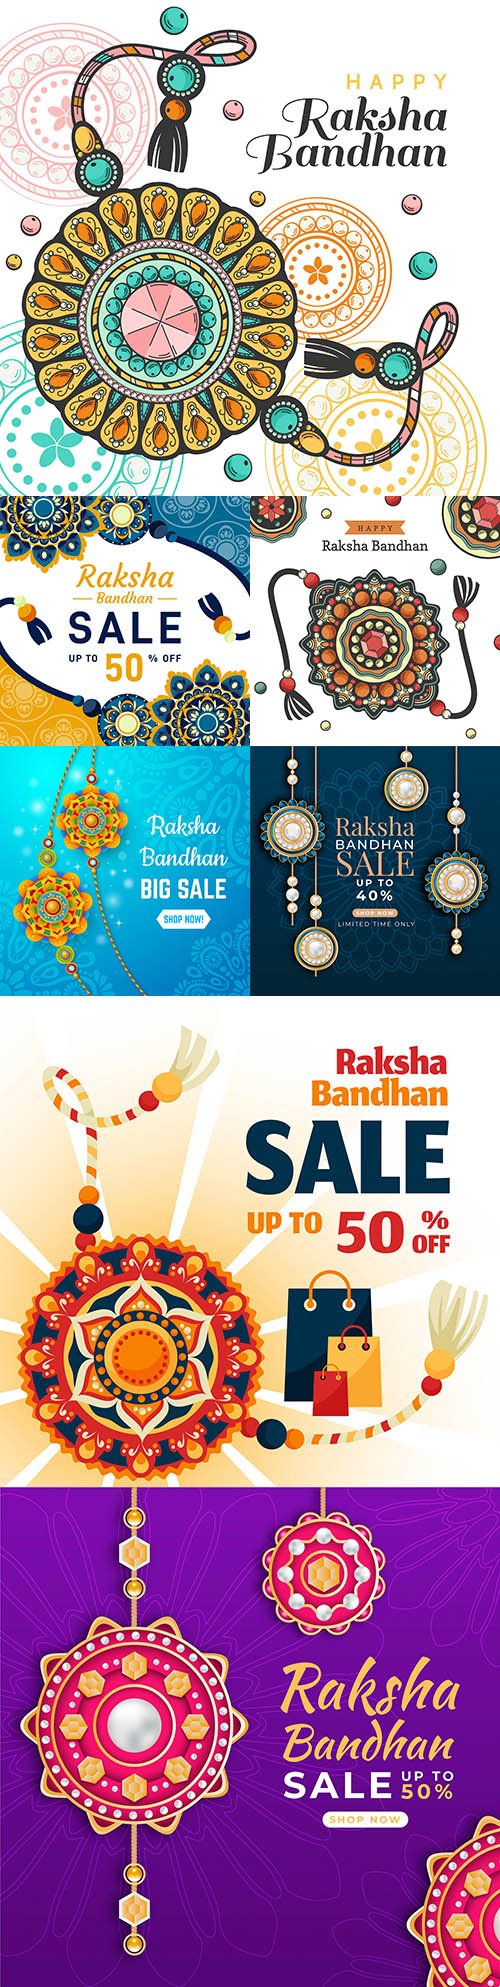 Raksha Bandhan Indian Holiday sale Flat Design Illustration